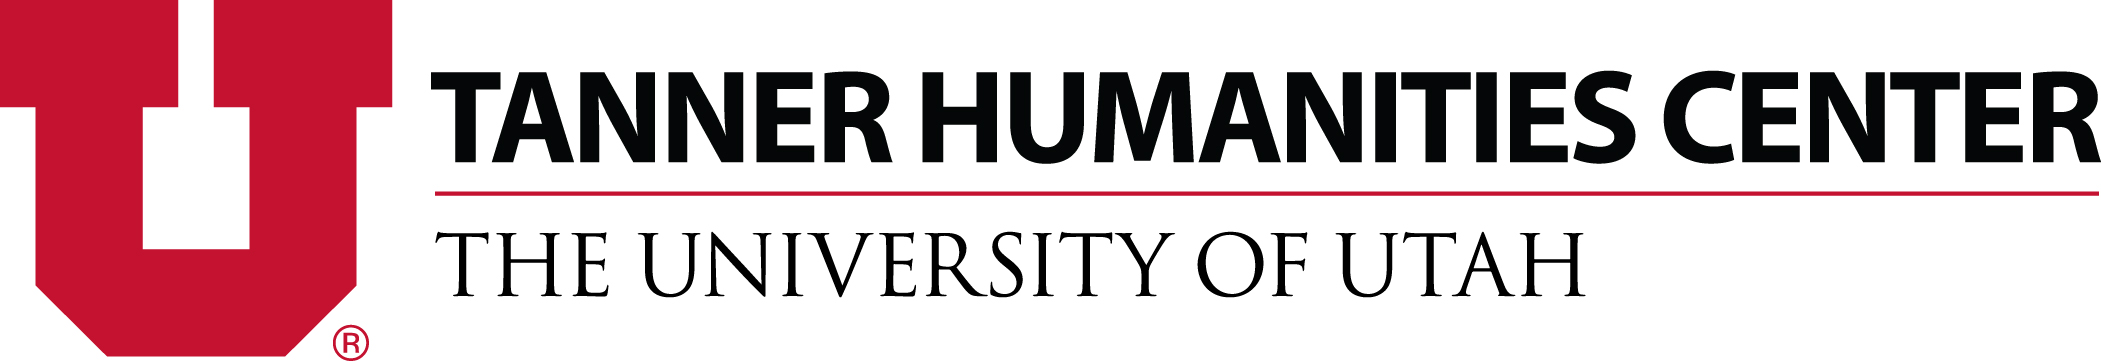 Tanner Humanities Center Logo Horizontal